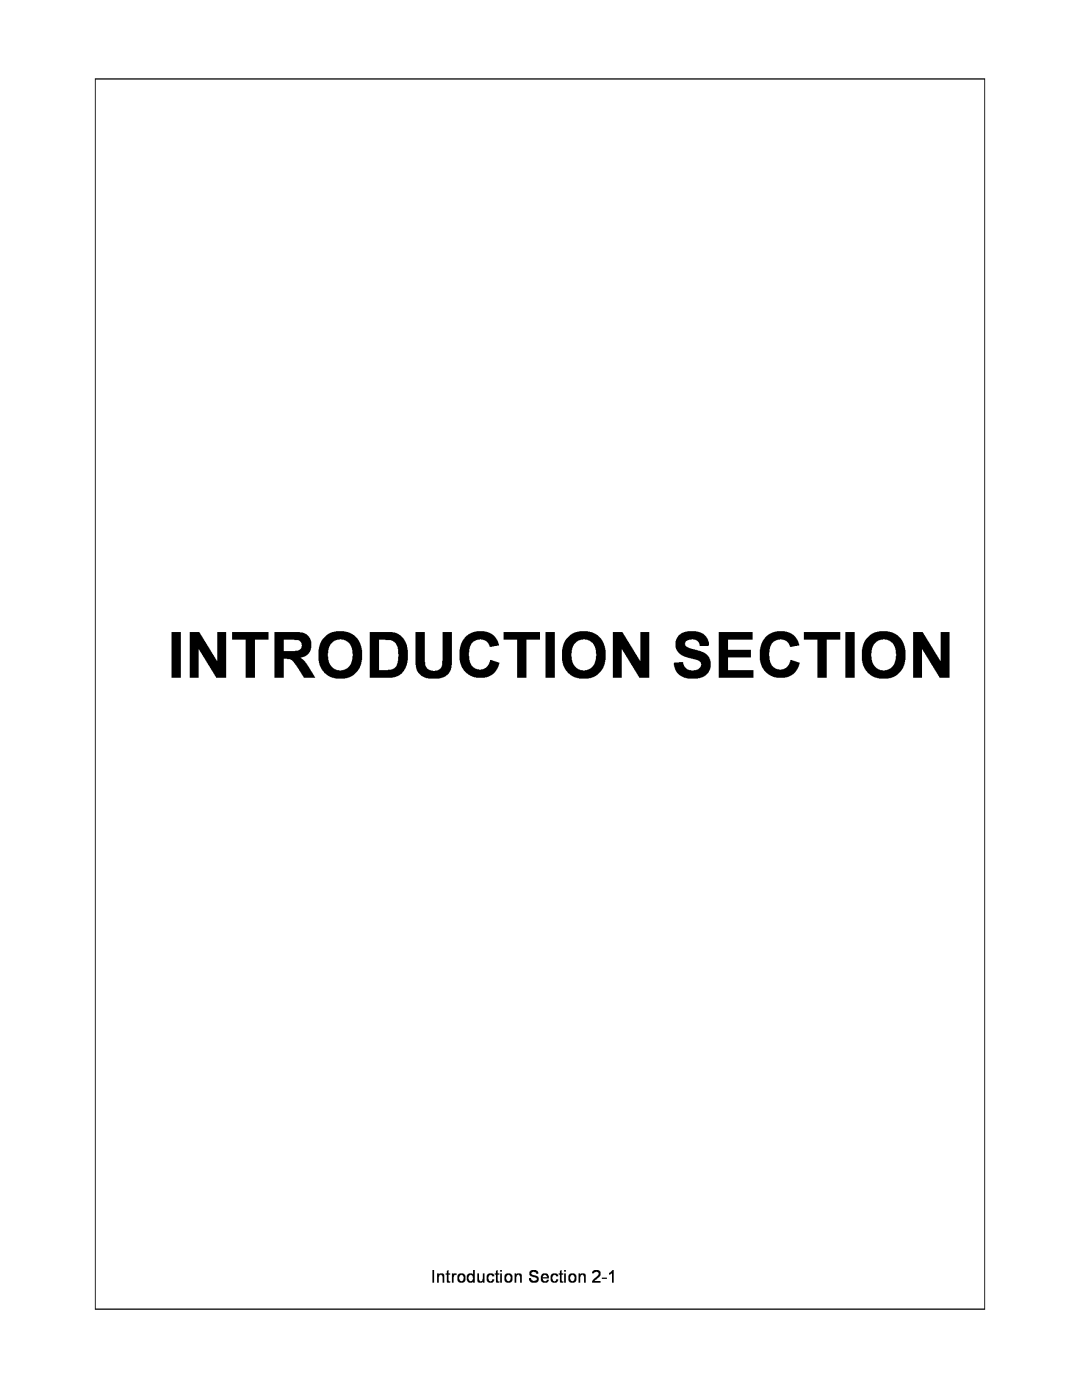 Alamo 2500 manual Introduction Section 